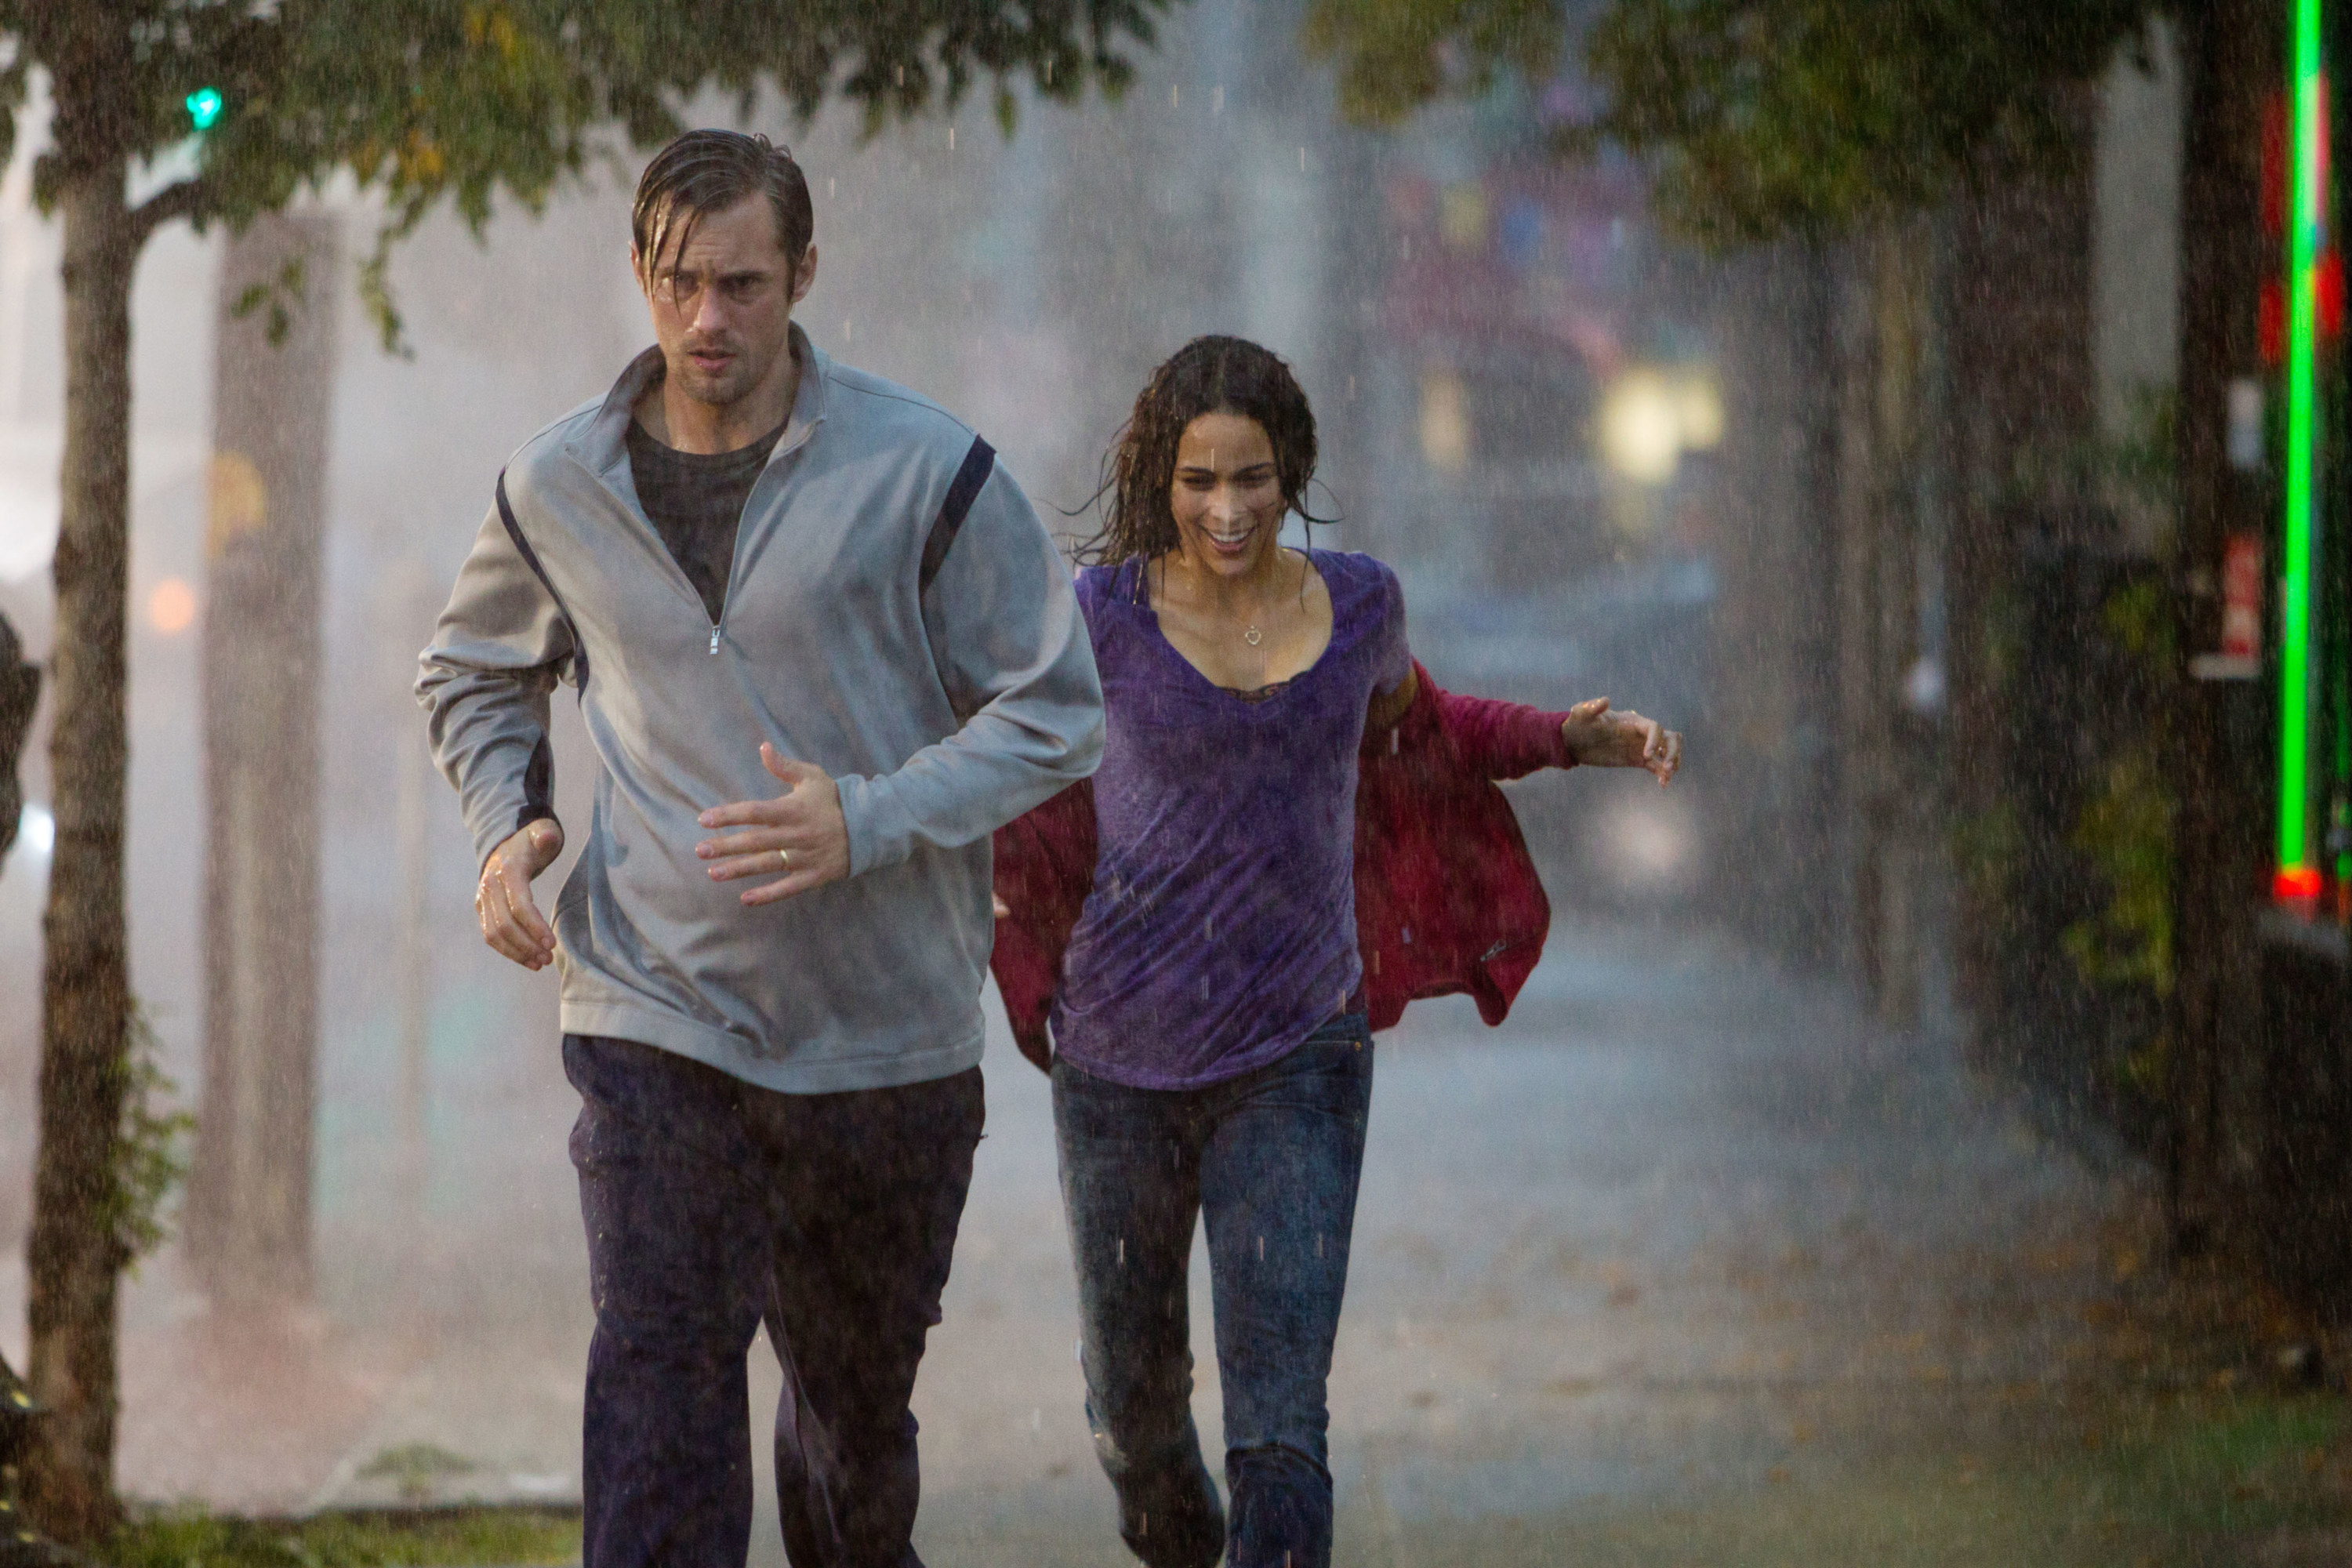 Alexander Skarsgard and Paula Patton run in the rain